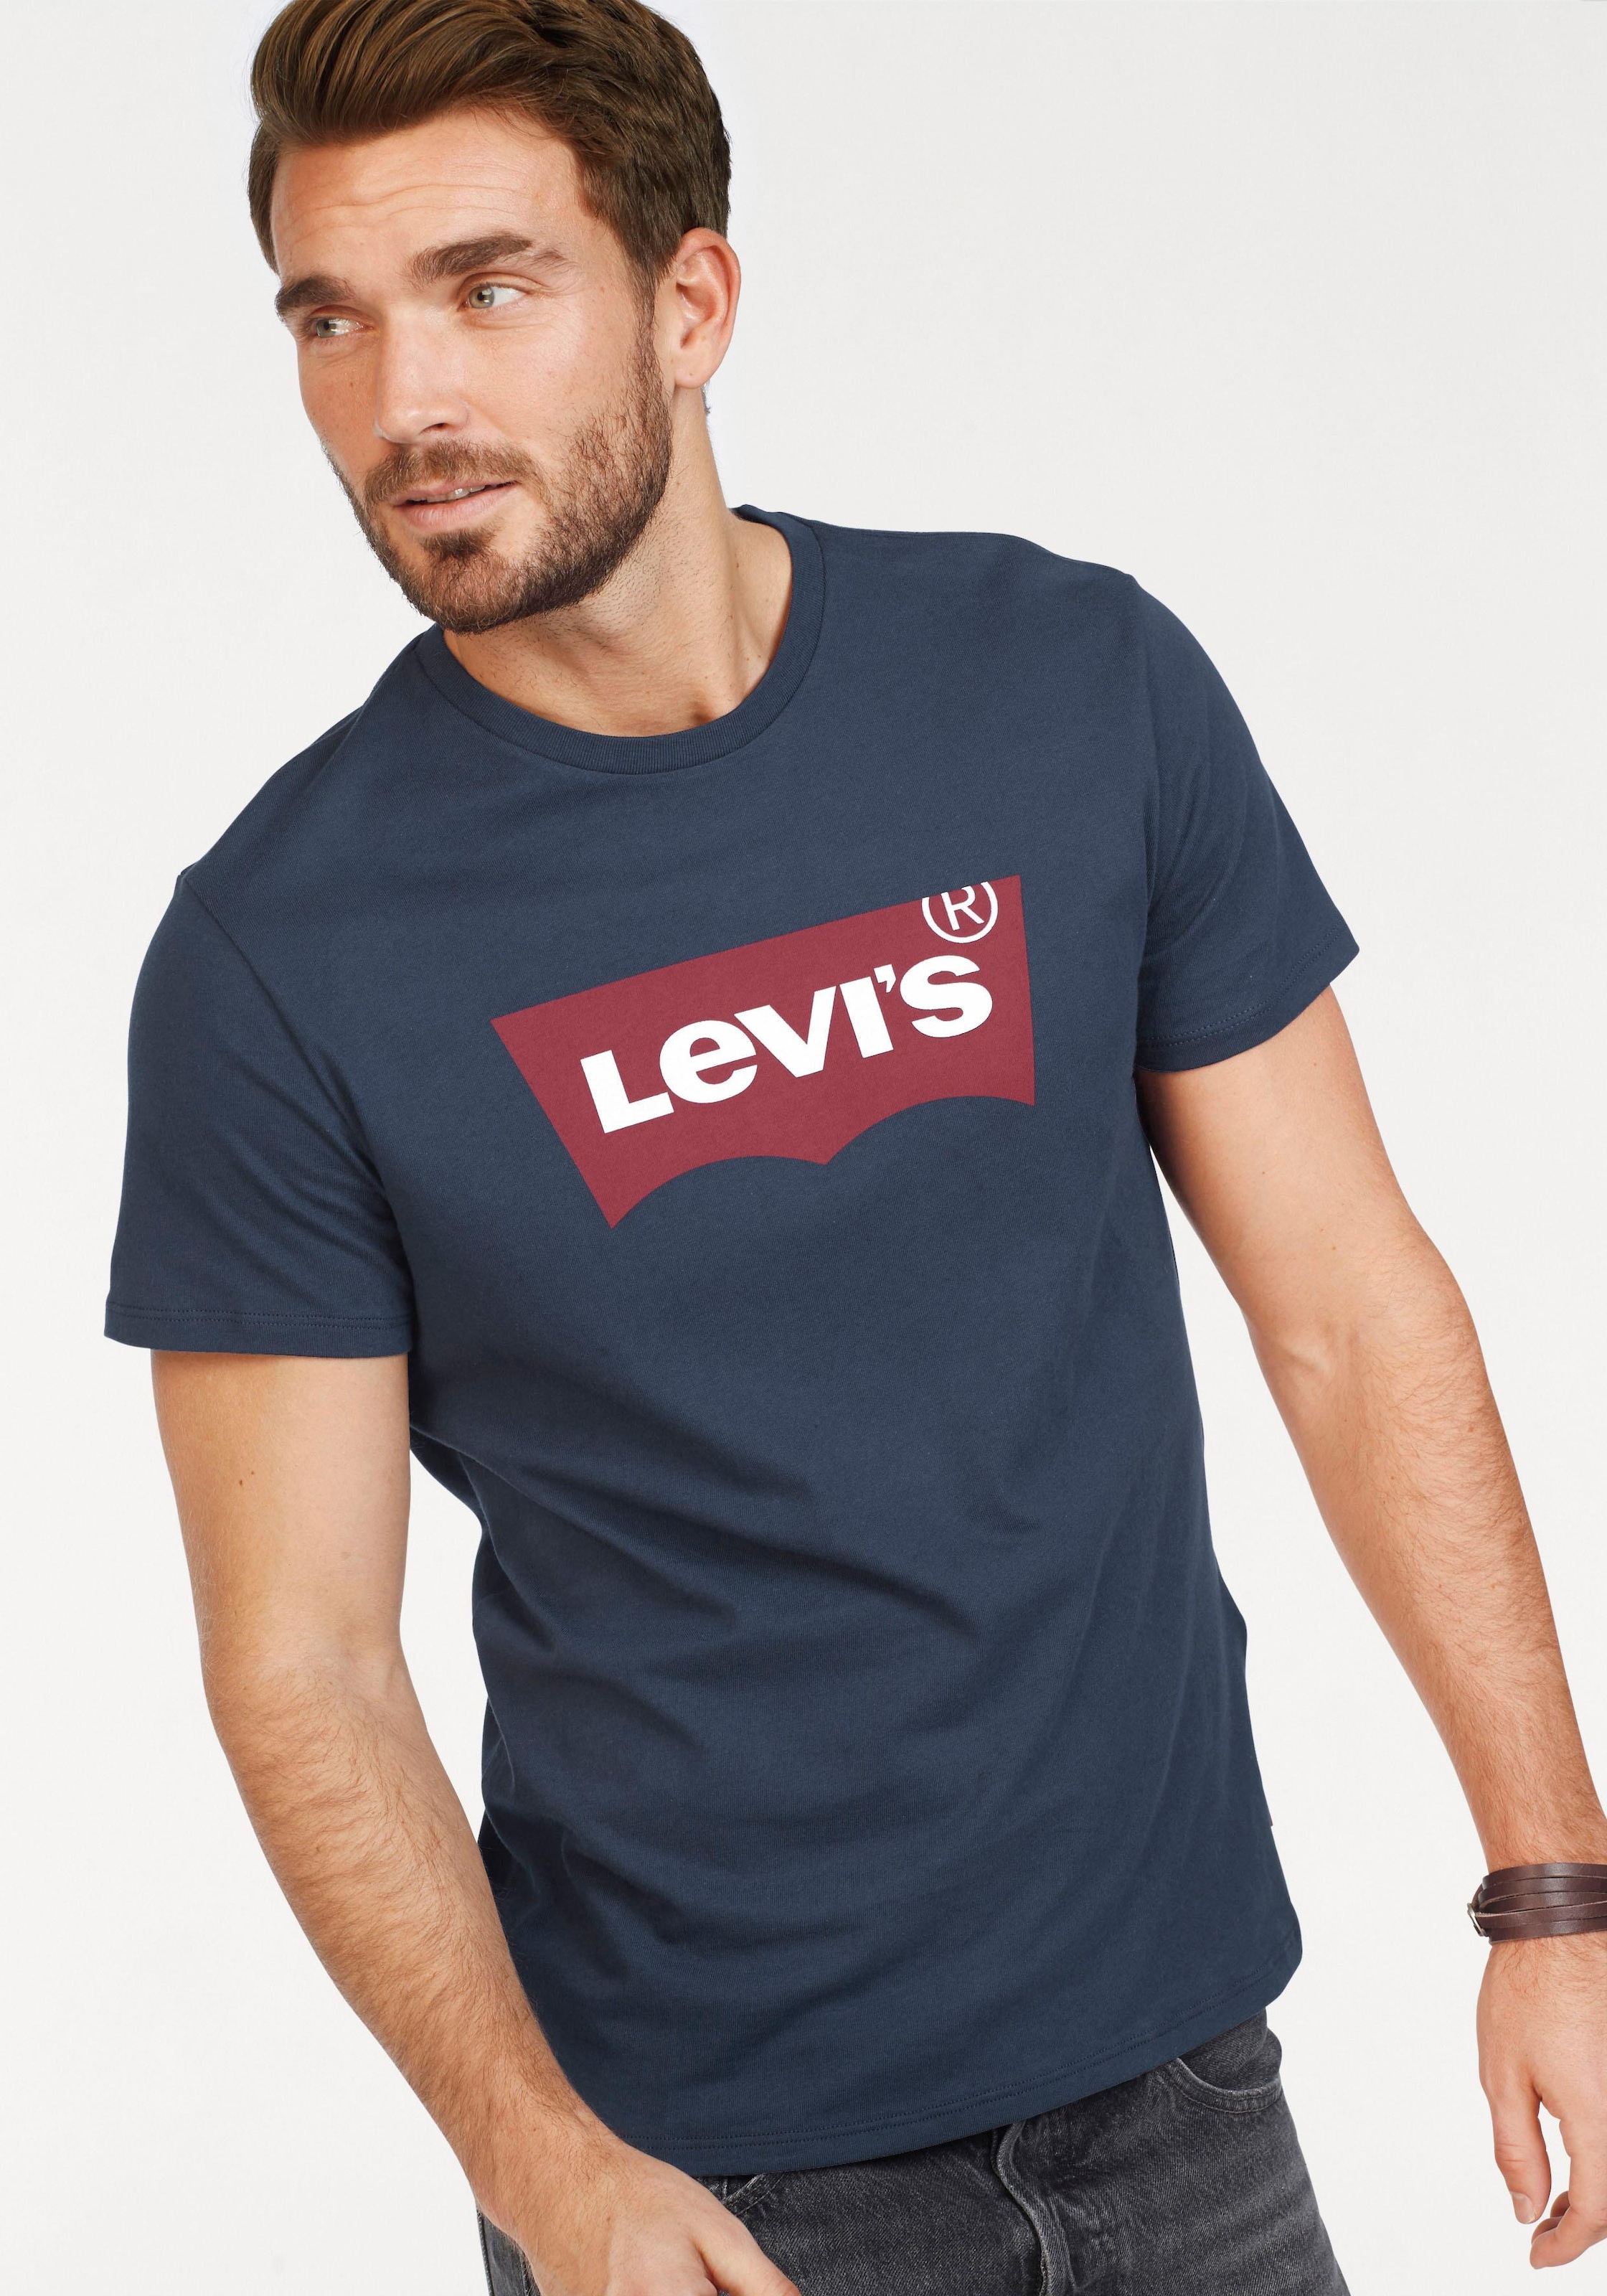 Levi's Mode bestellen auf ottoversand.at